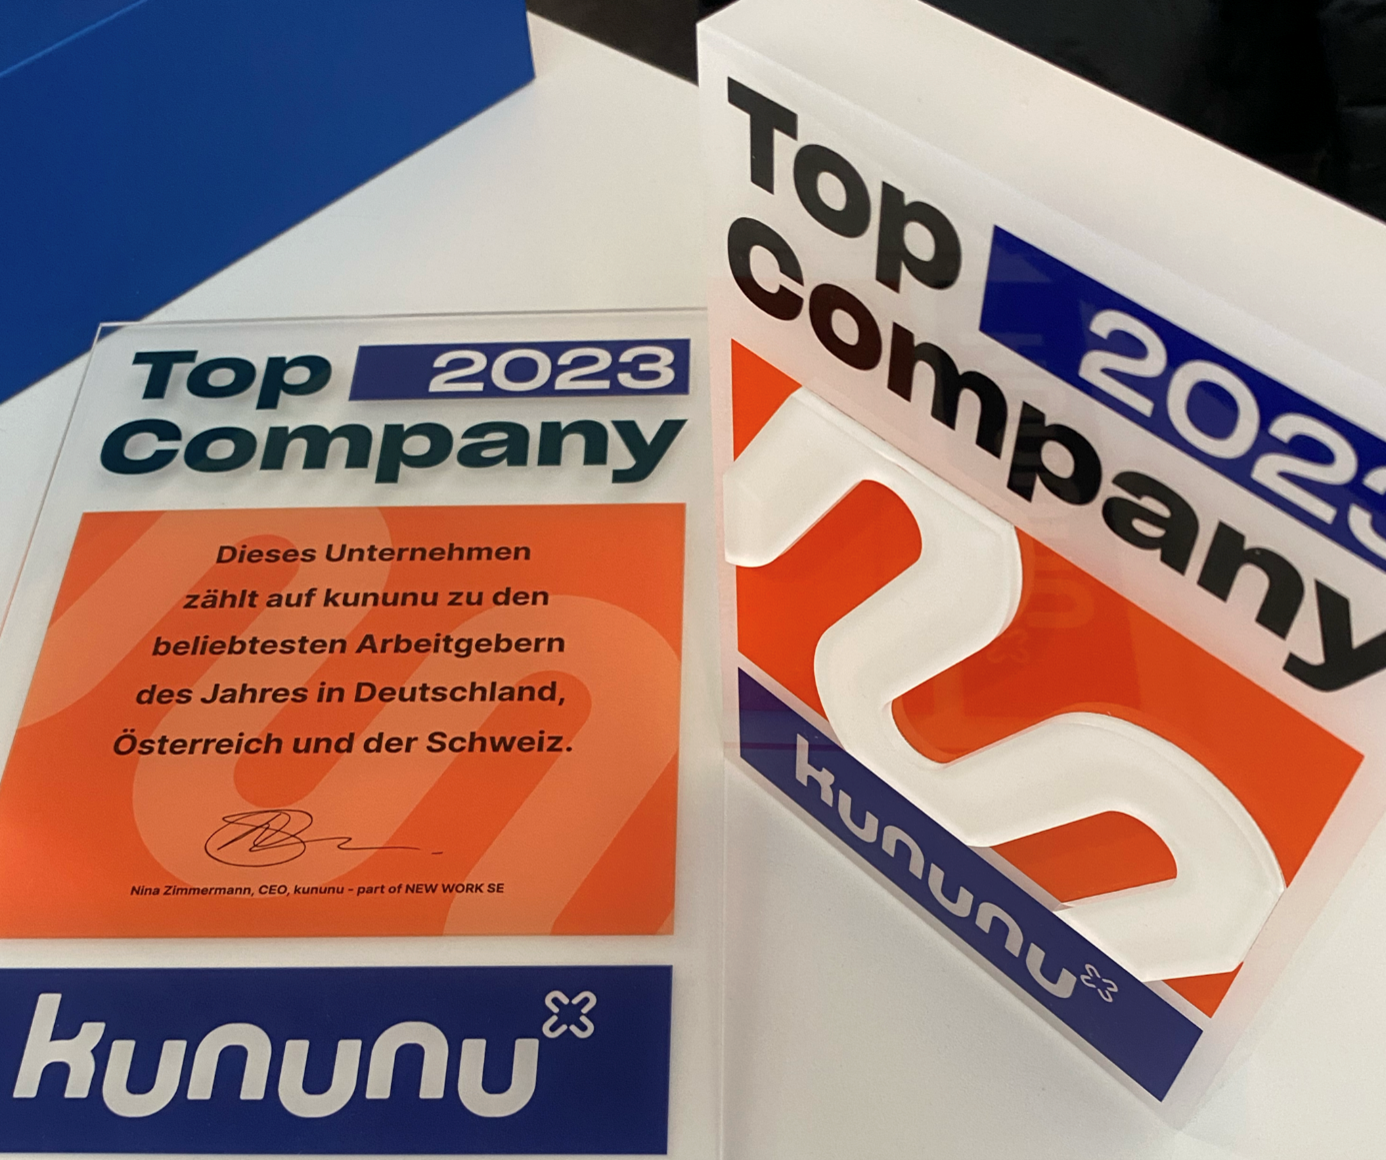 Bild des Awards "Top Company 2023" von kununu